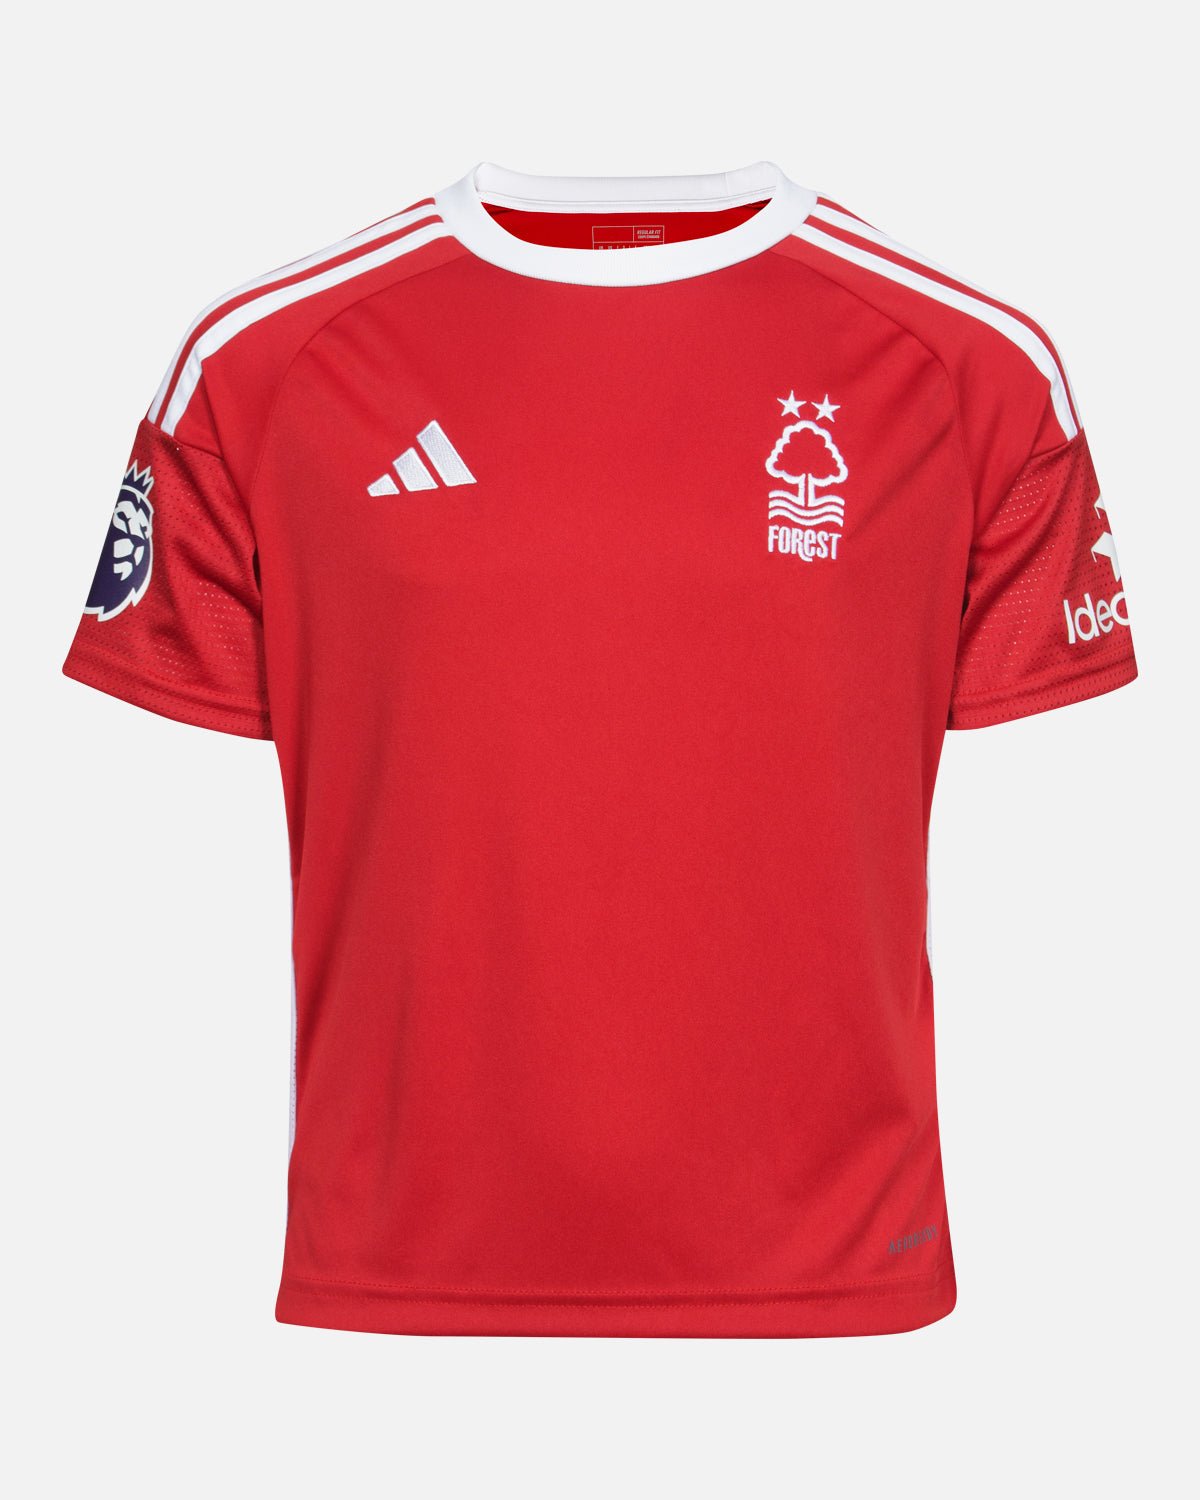 NFFC Junior Home Shirt 23-24 - Danilo 28 - Nottingham Forest FC